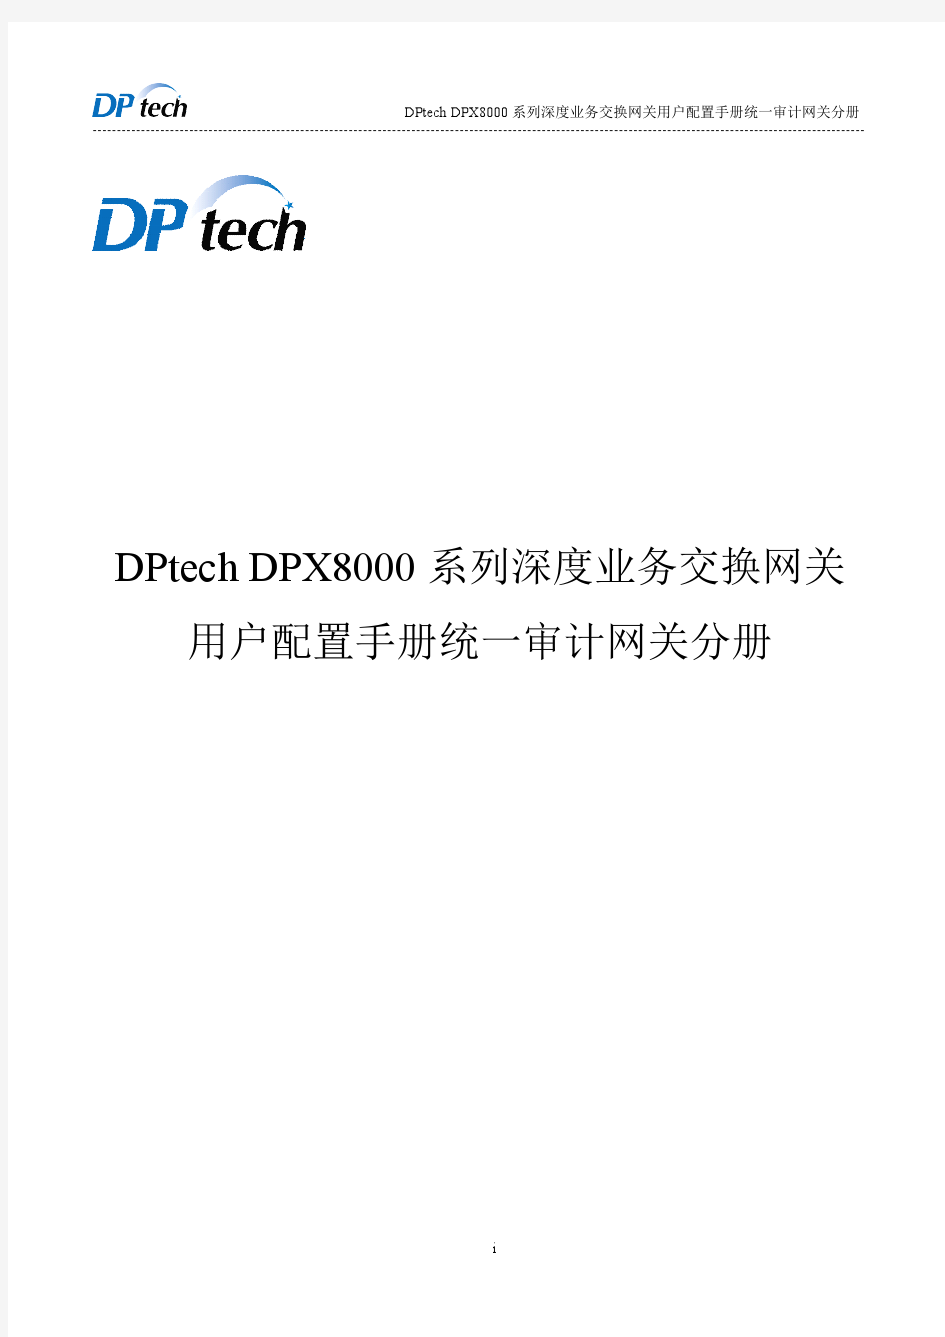 DPtech DPX8000 系列深度业务网关用户配置手册统一审计网关业务板